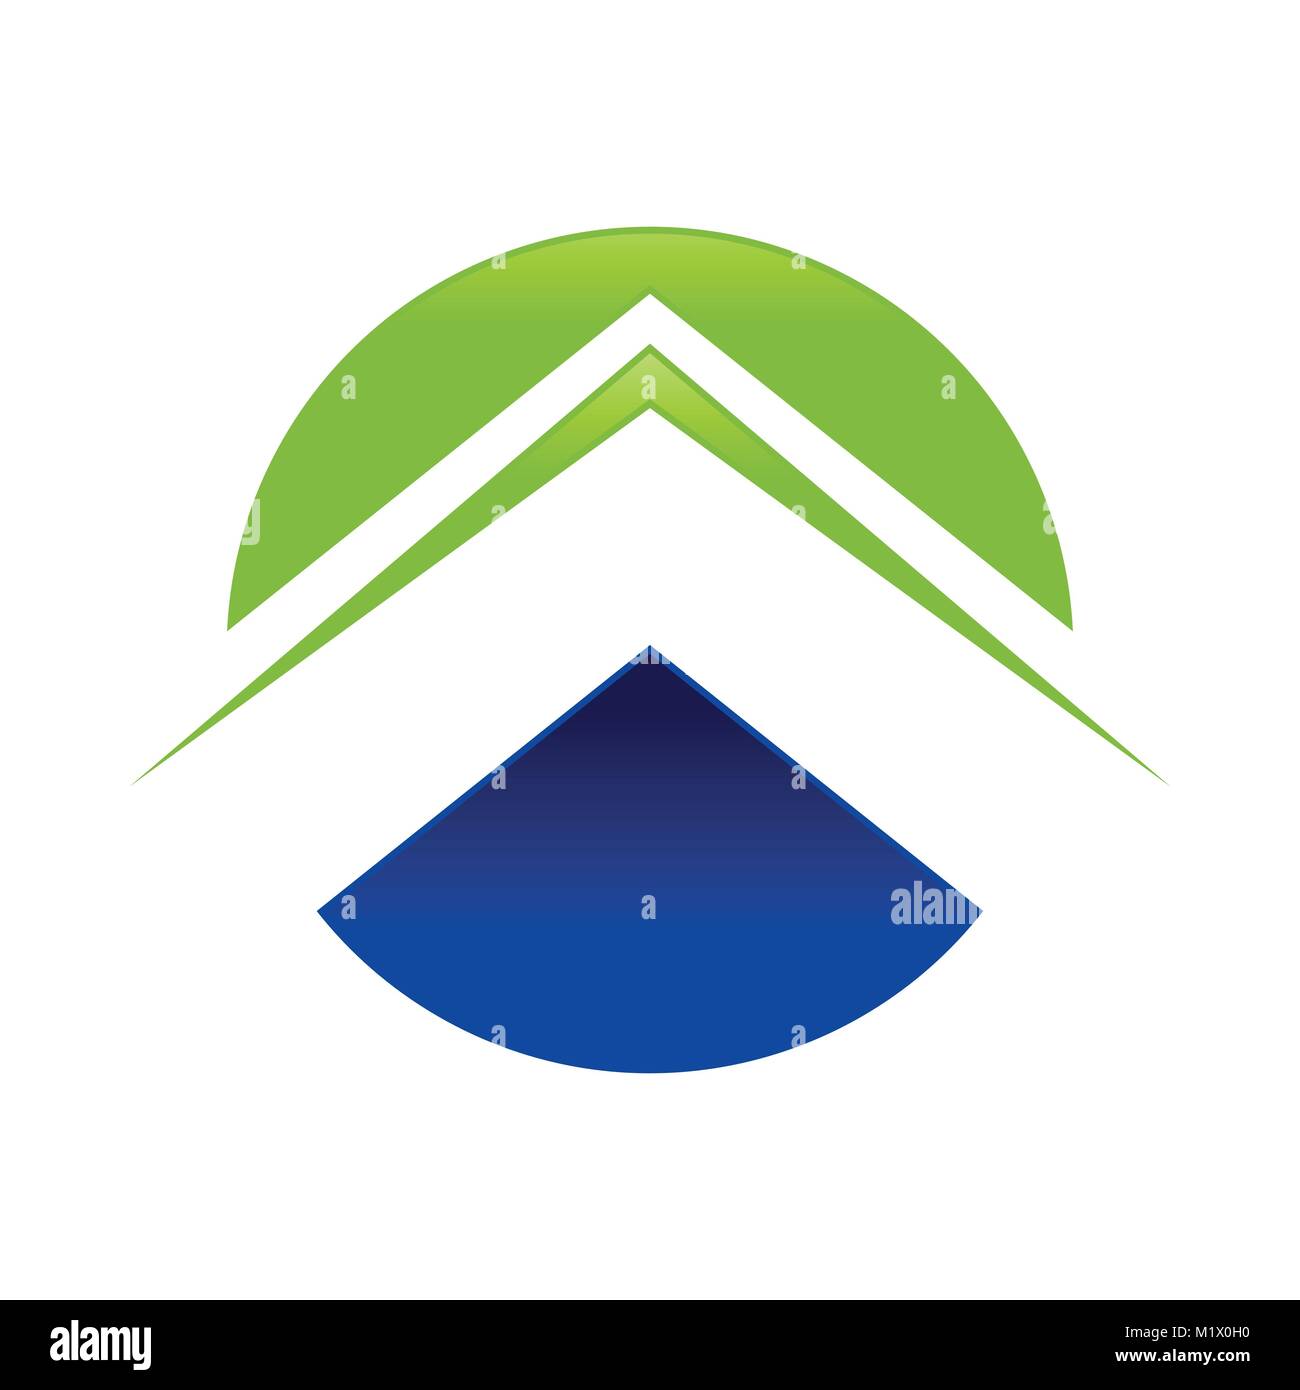 Symbole de flèche Circle Abstract Vector Graphic Design Logo Illustration de Vecteur